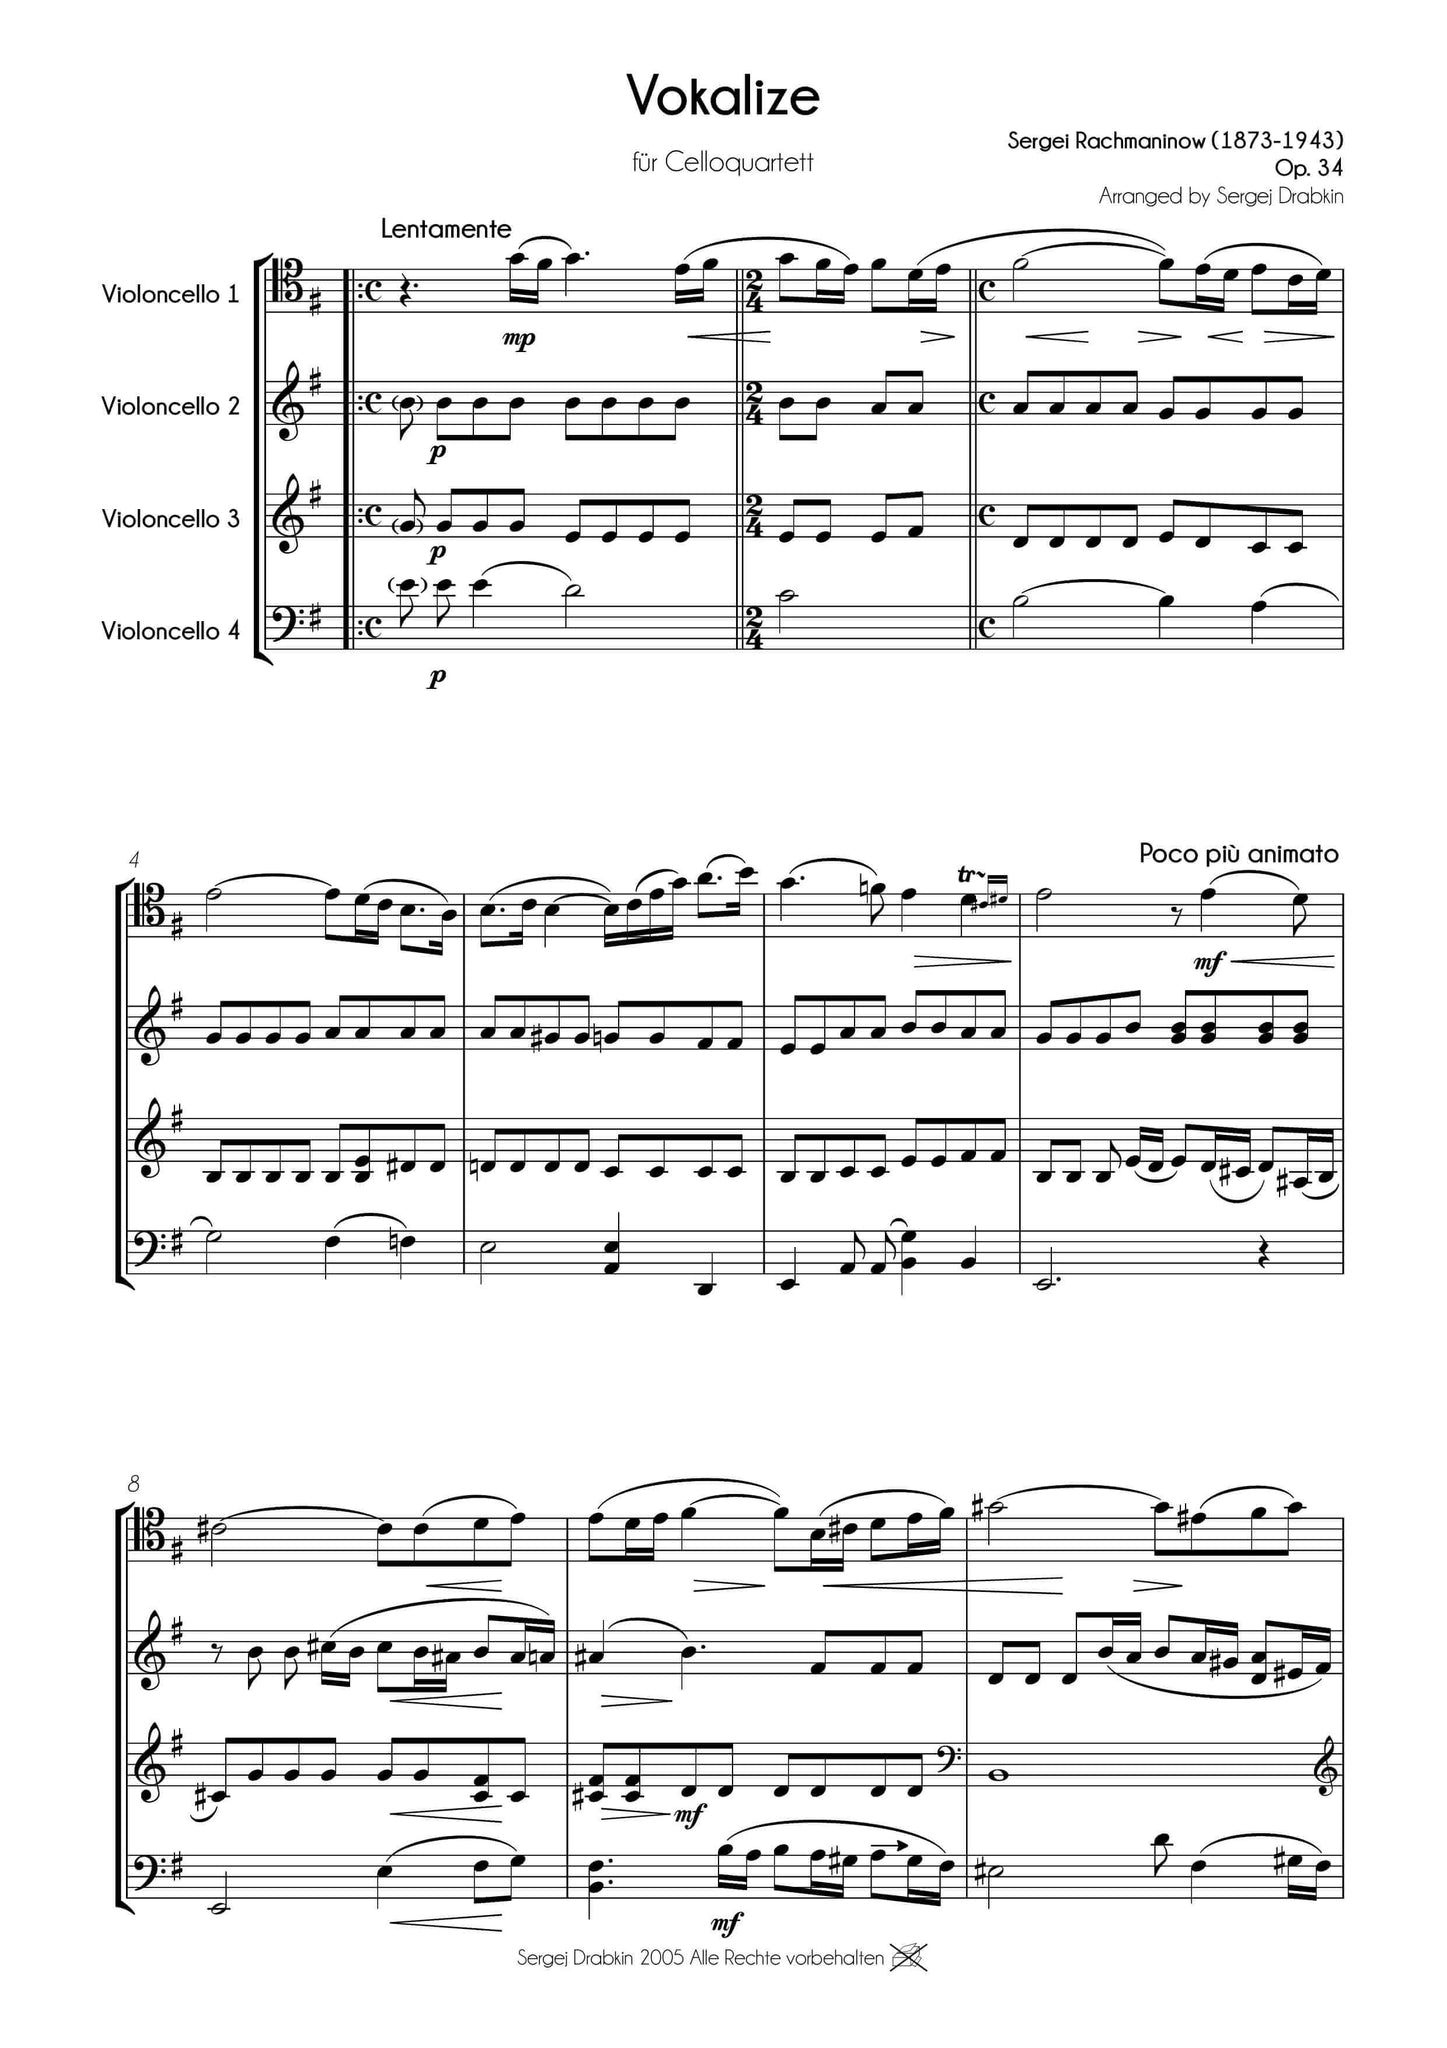 Rachmaninoff, Sergei - Vocalise, Op. 34, No.14